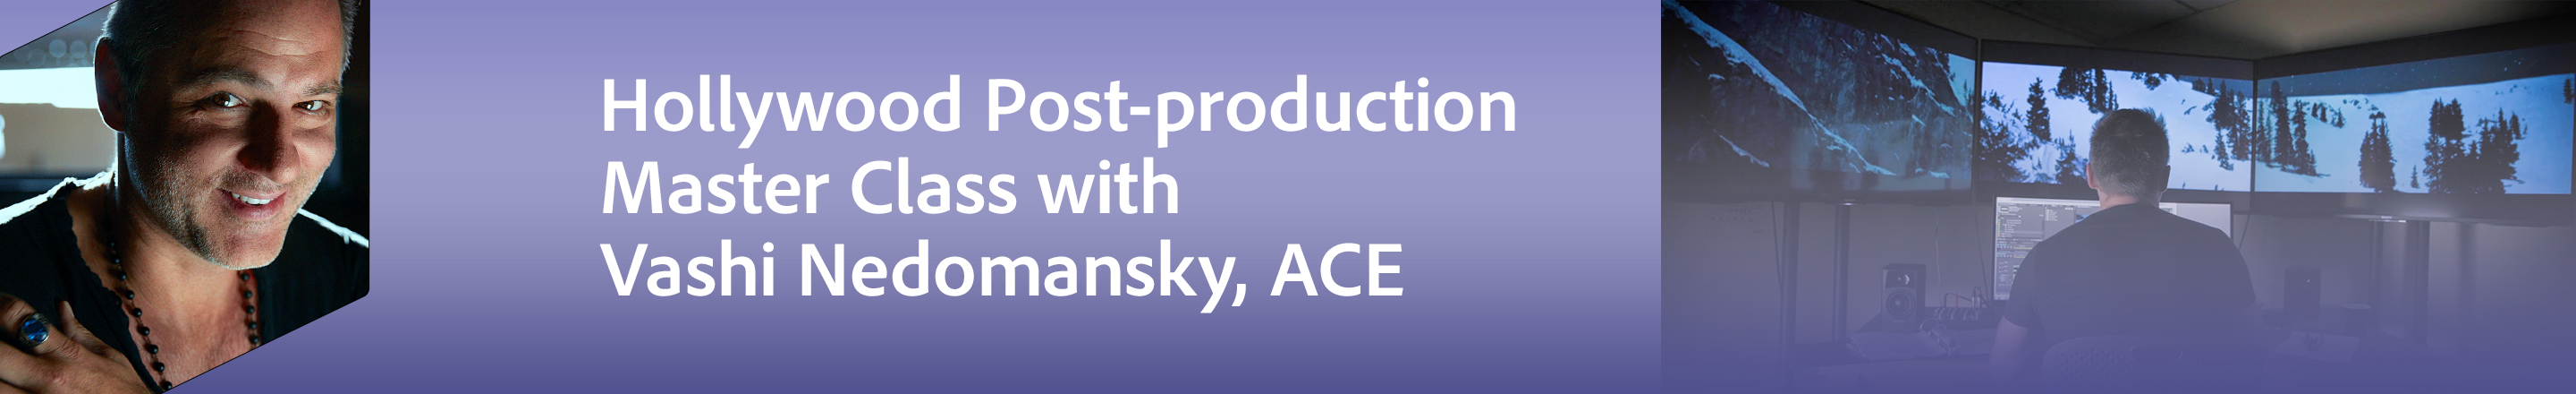 Hollywood Post-production Master Class with Vashi Nedomansky, ACE